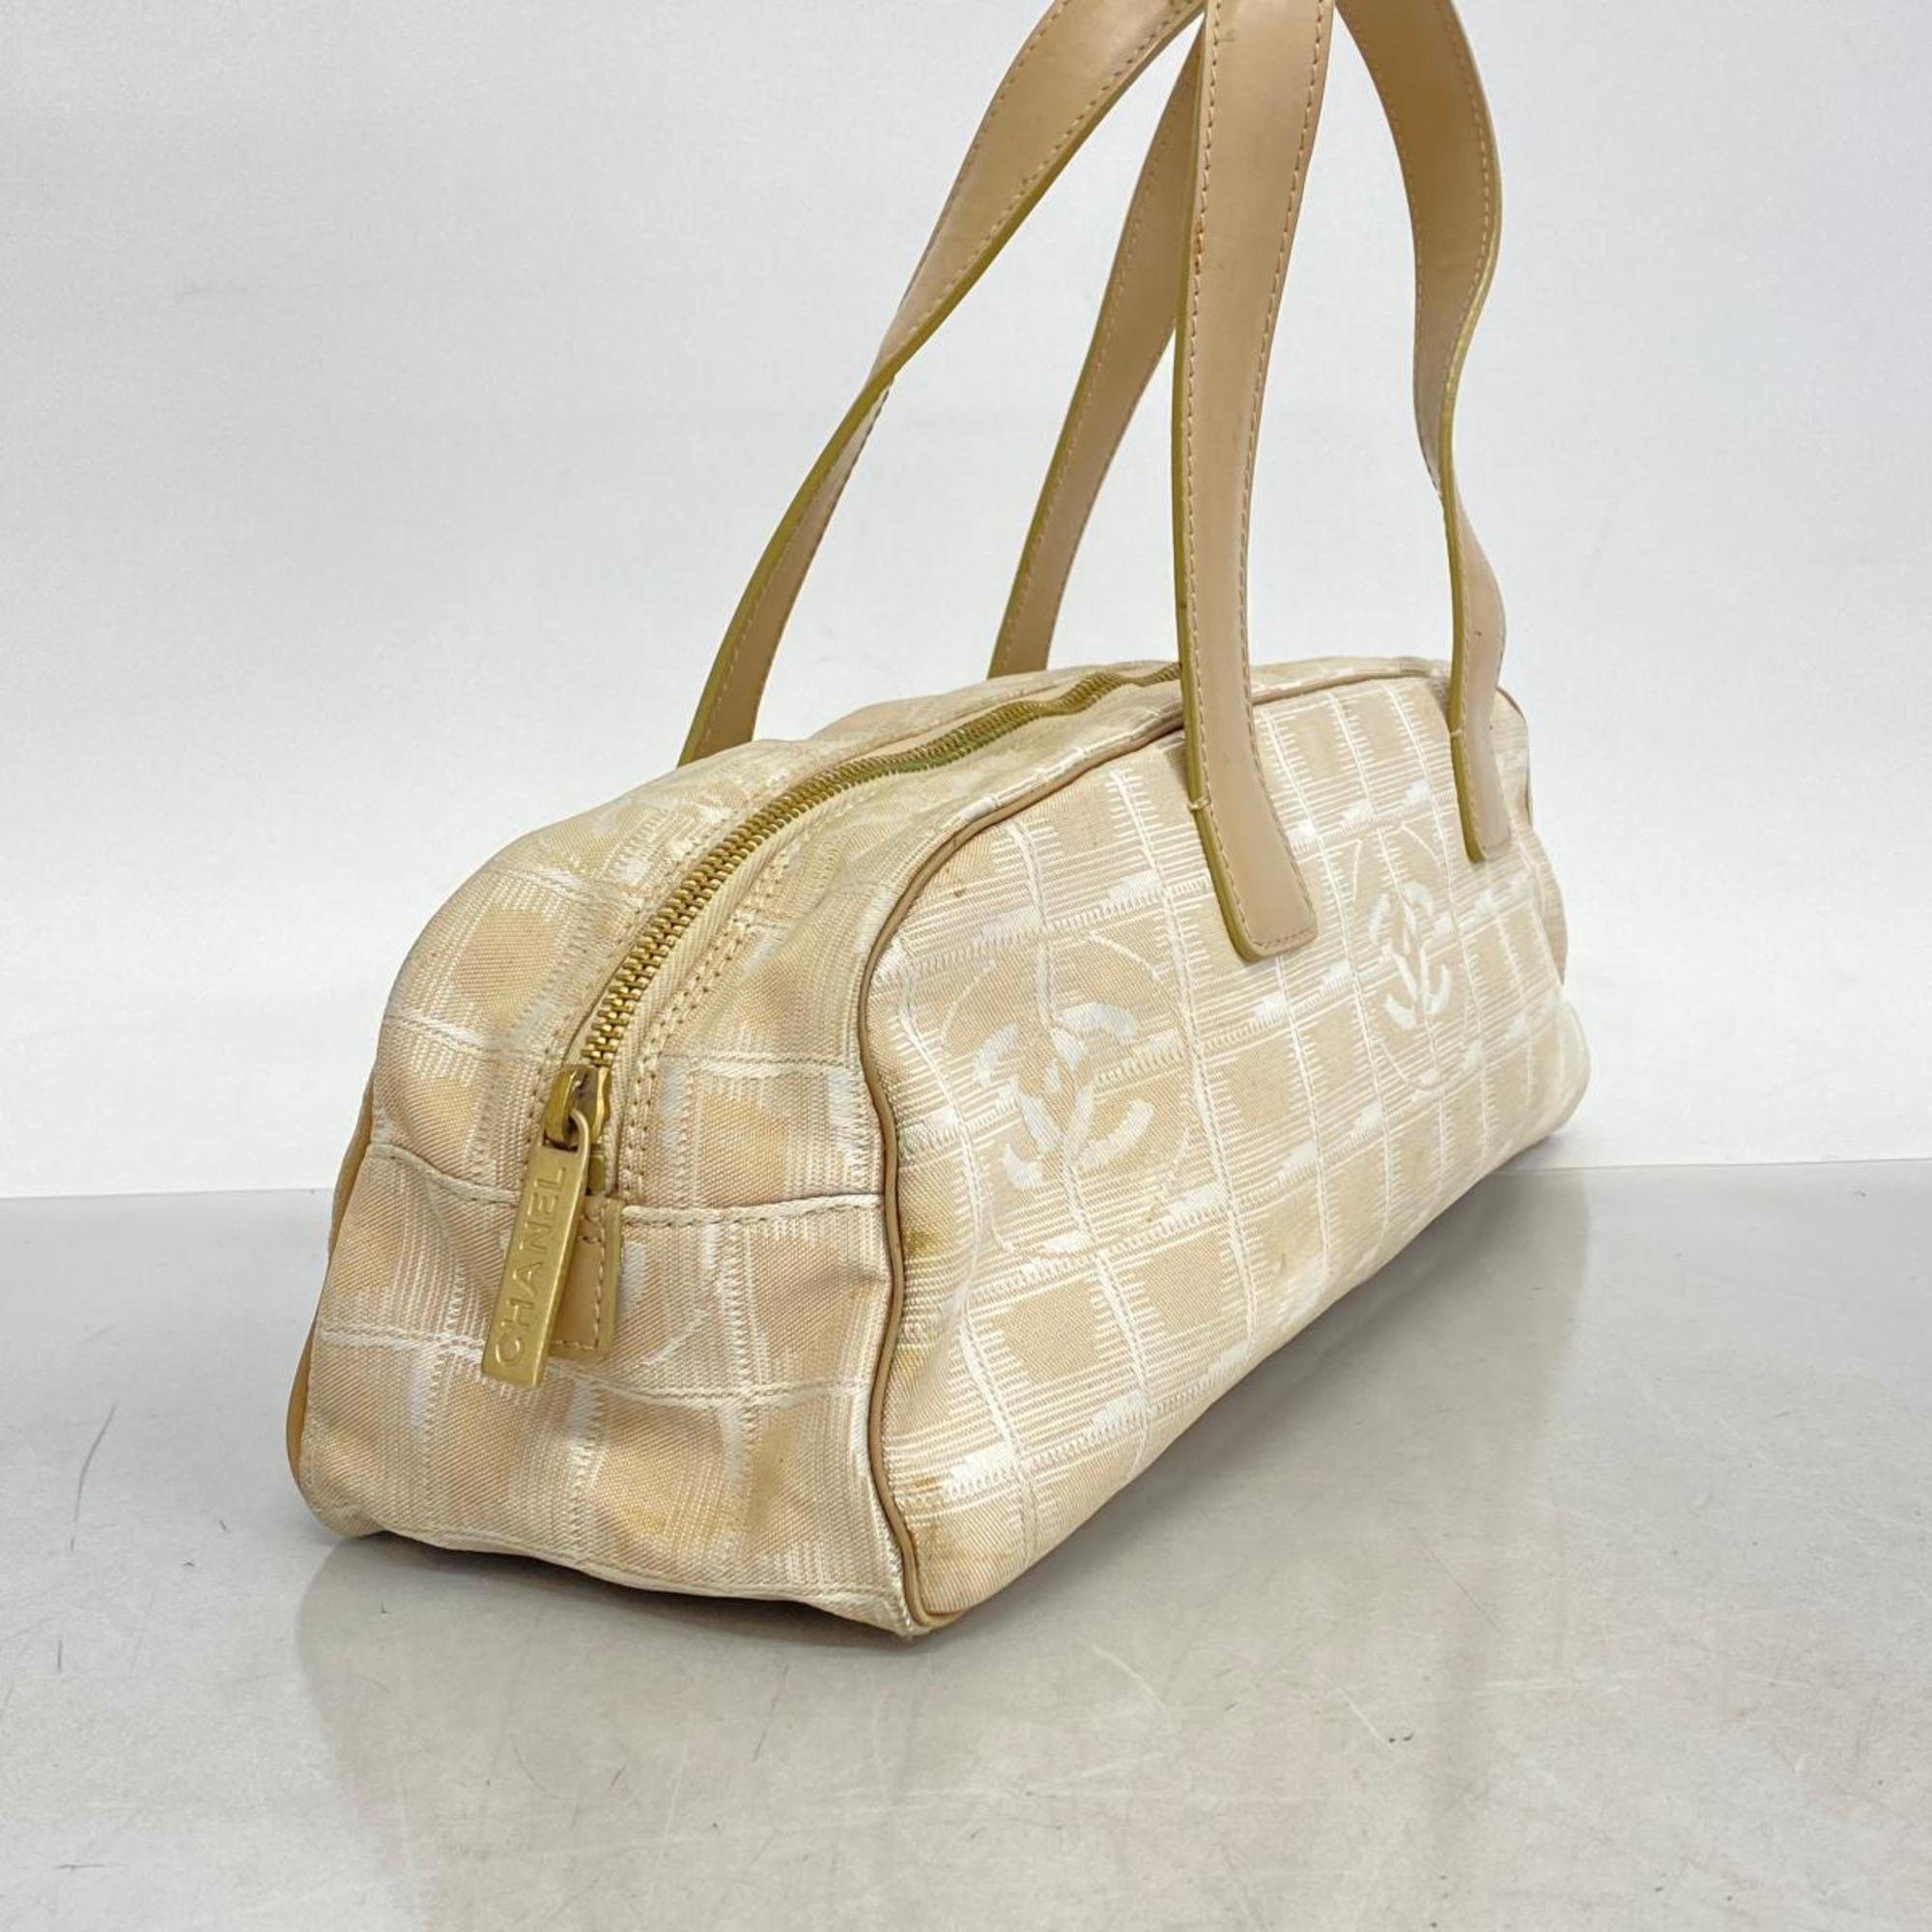 Chanel handbag New Travel Nylon Beige Ladies